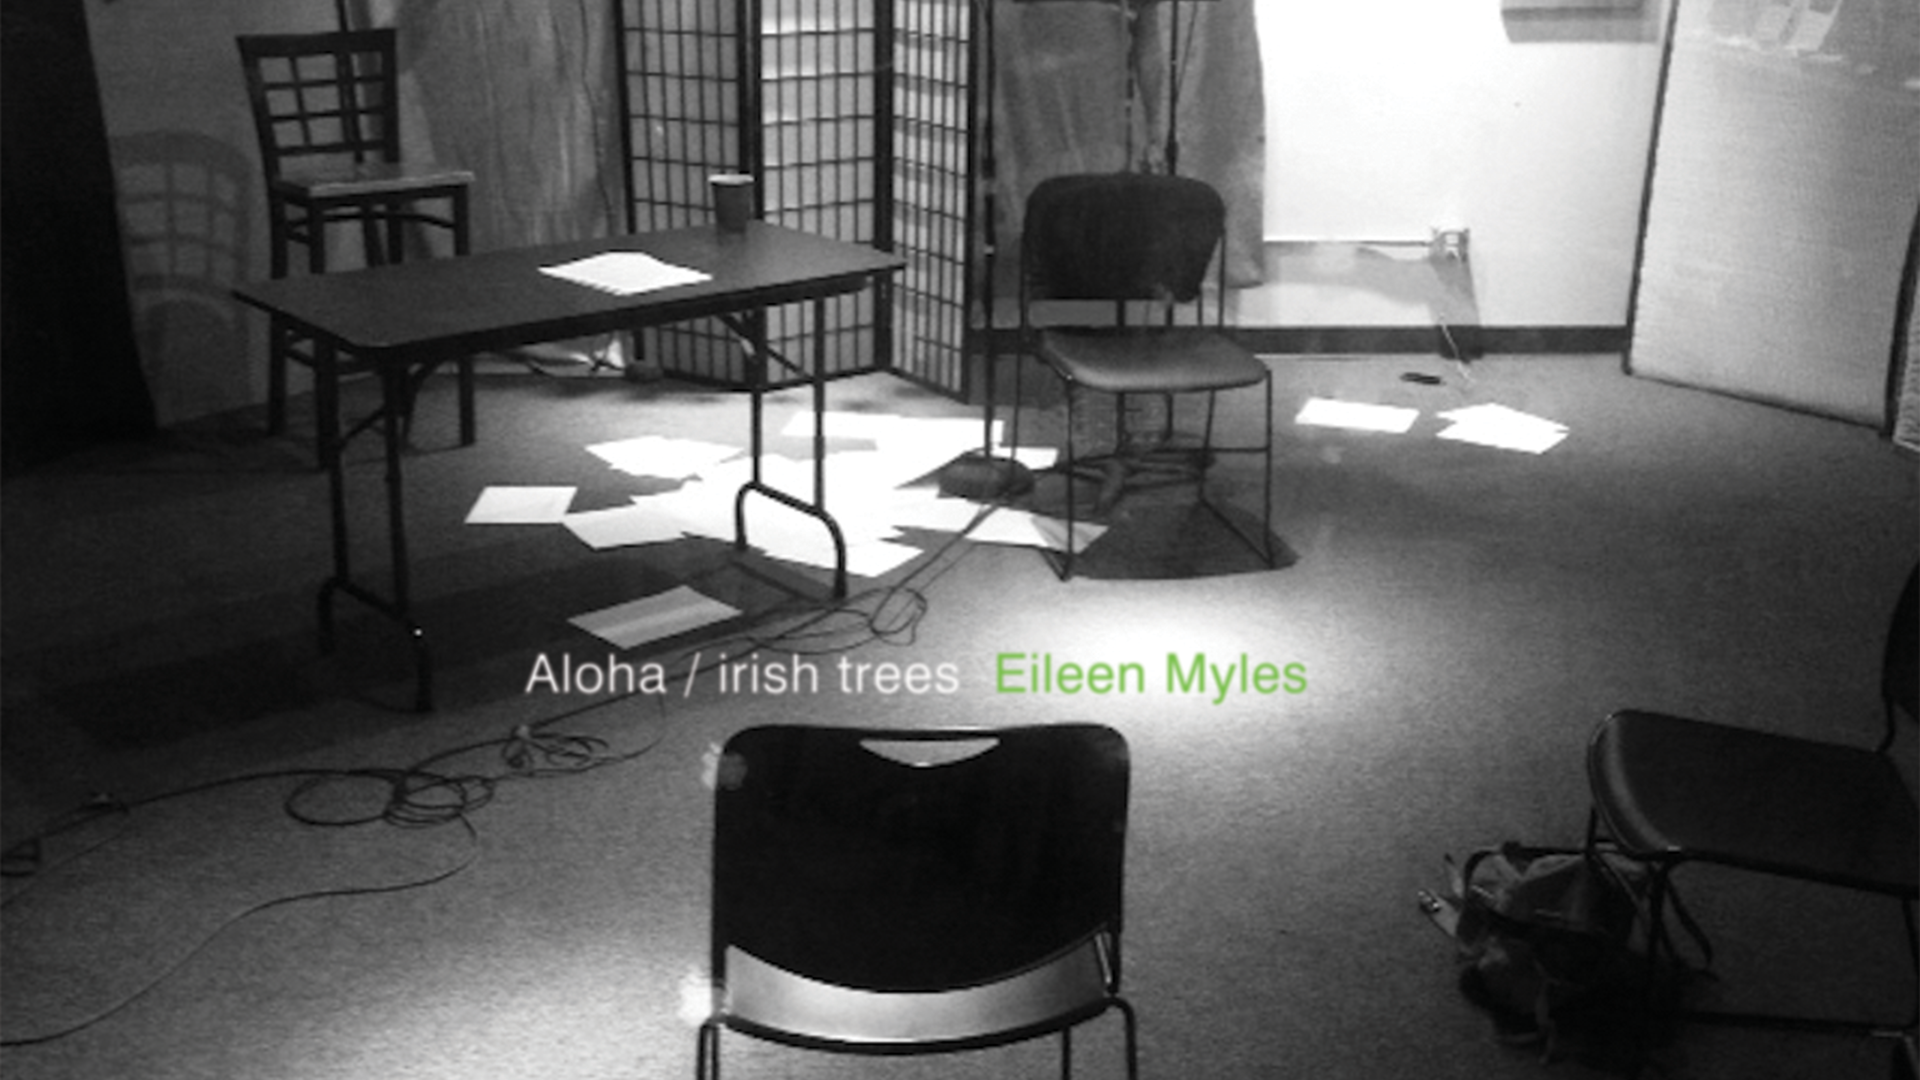 Album cover of Eileen Myles' ALOHA/IRISH TREES; links to news story